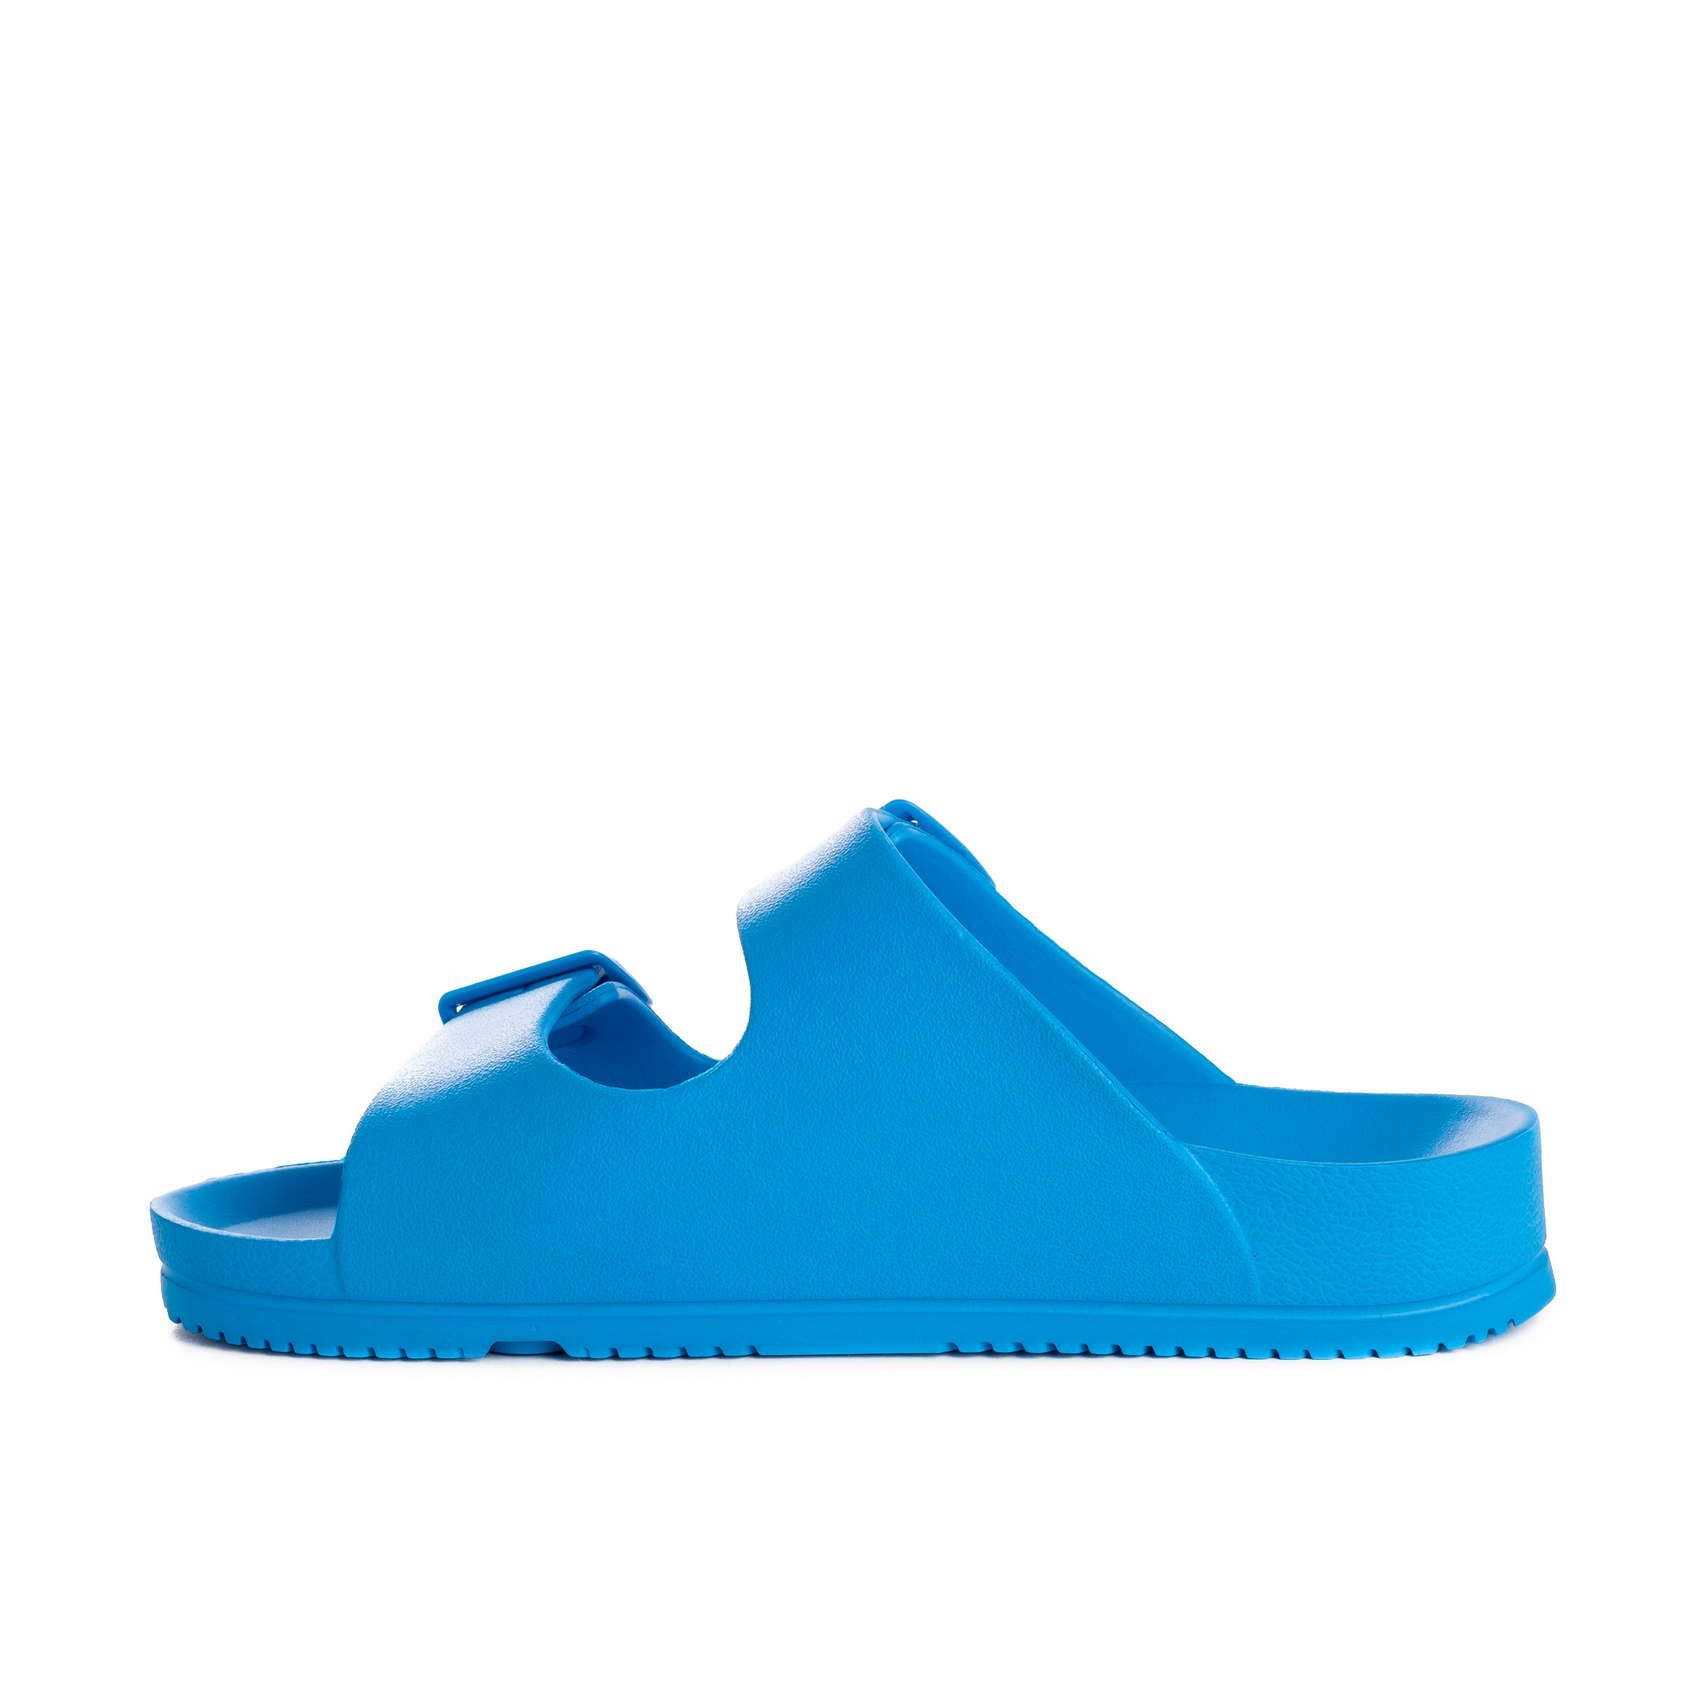 Flat sandal block color in blue